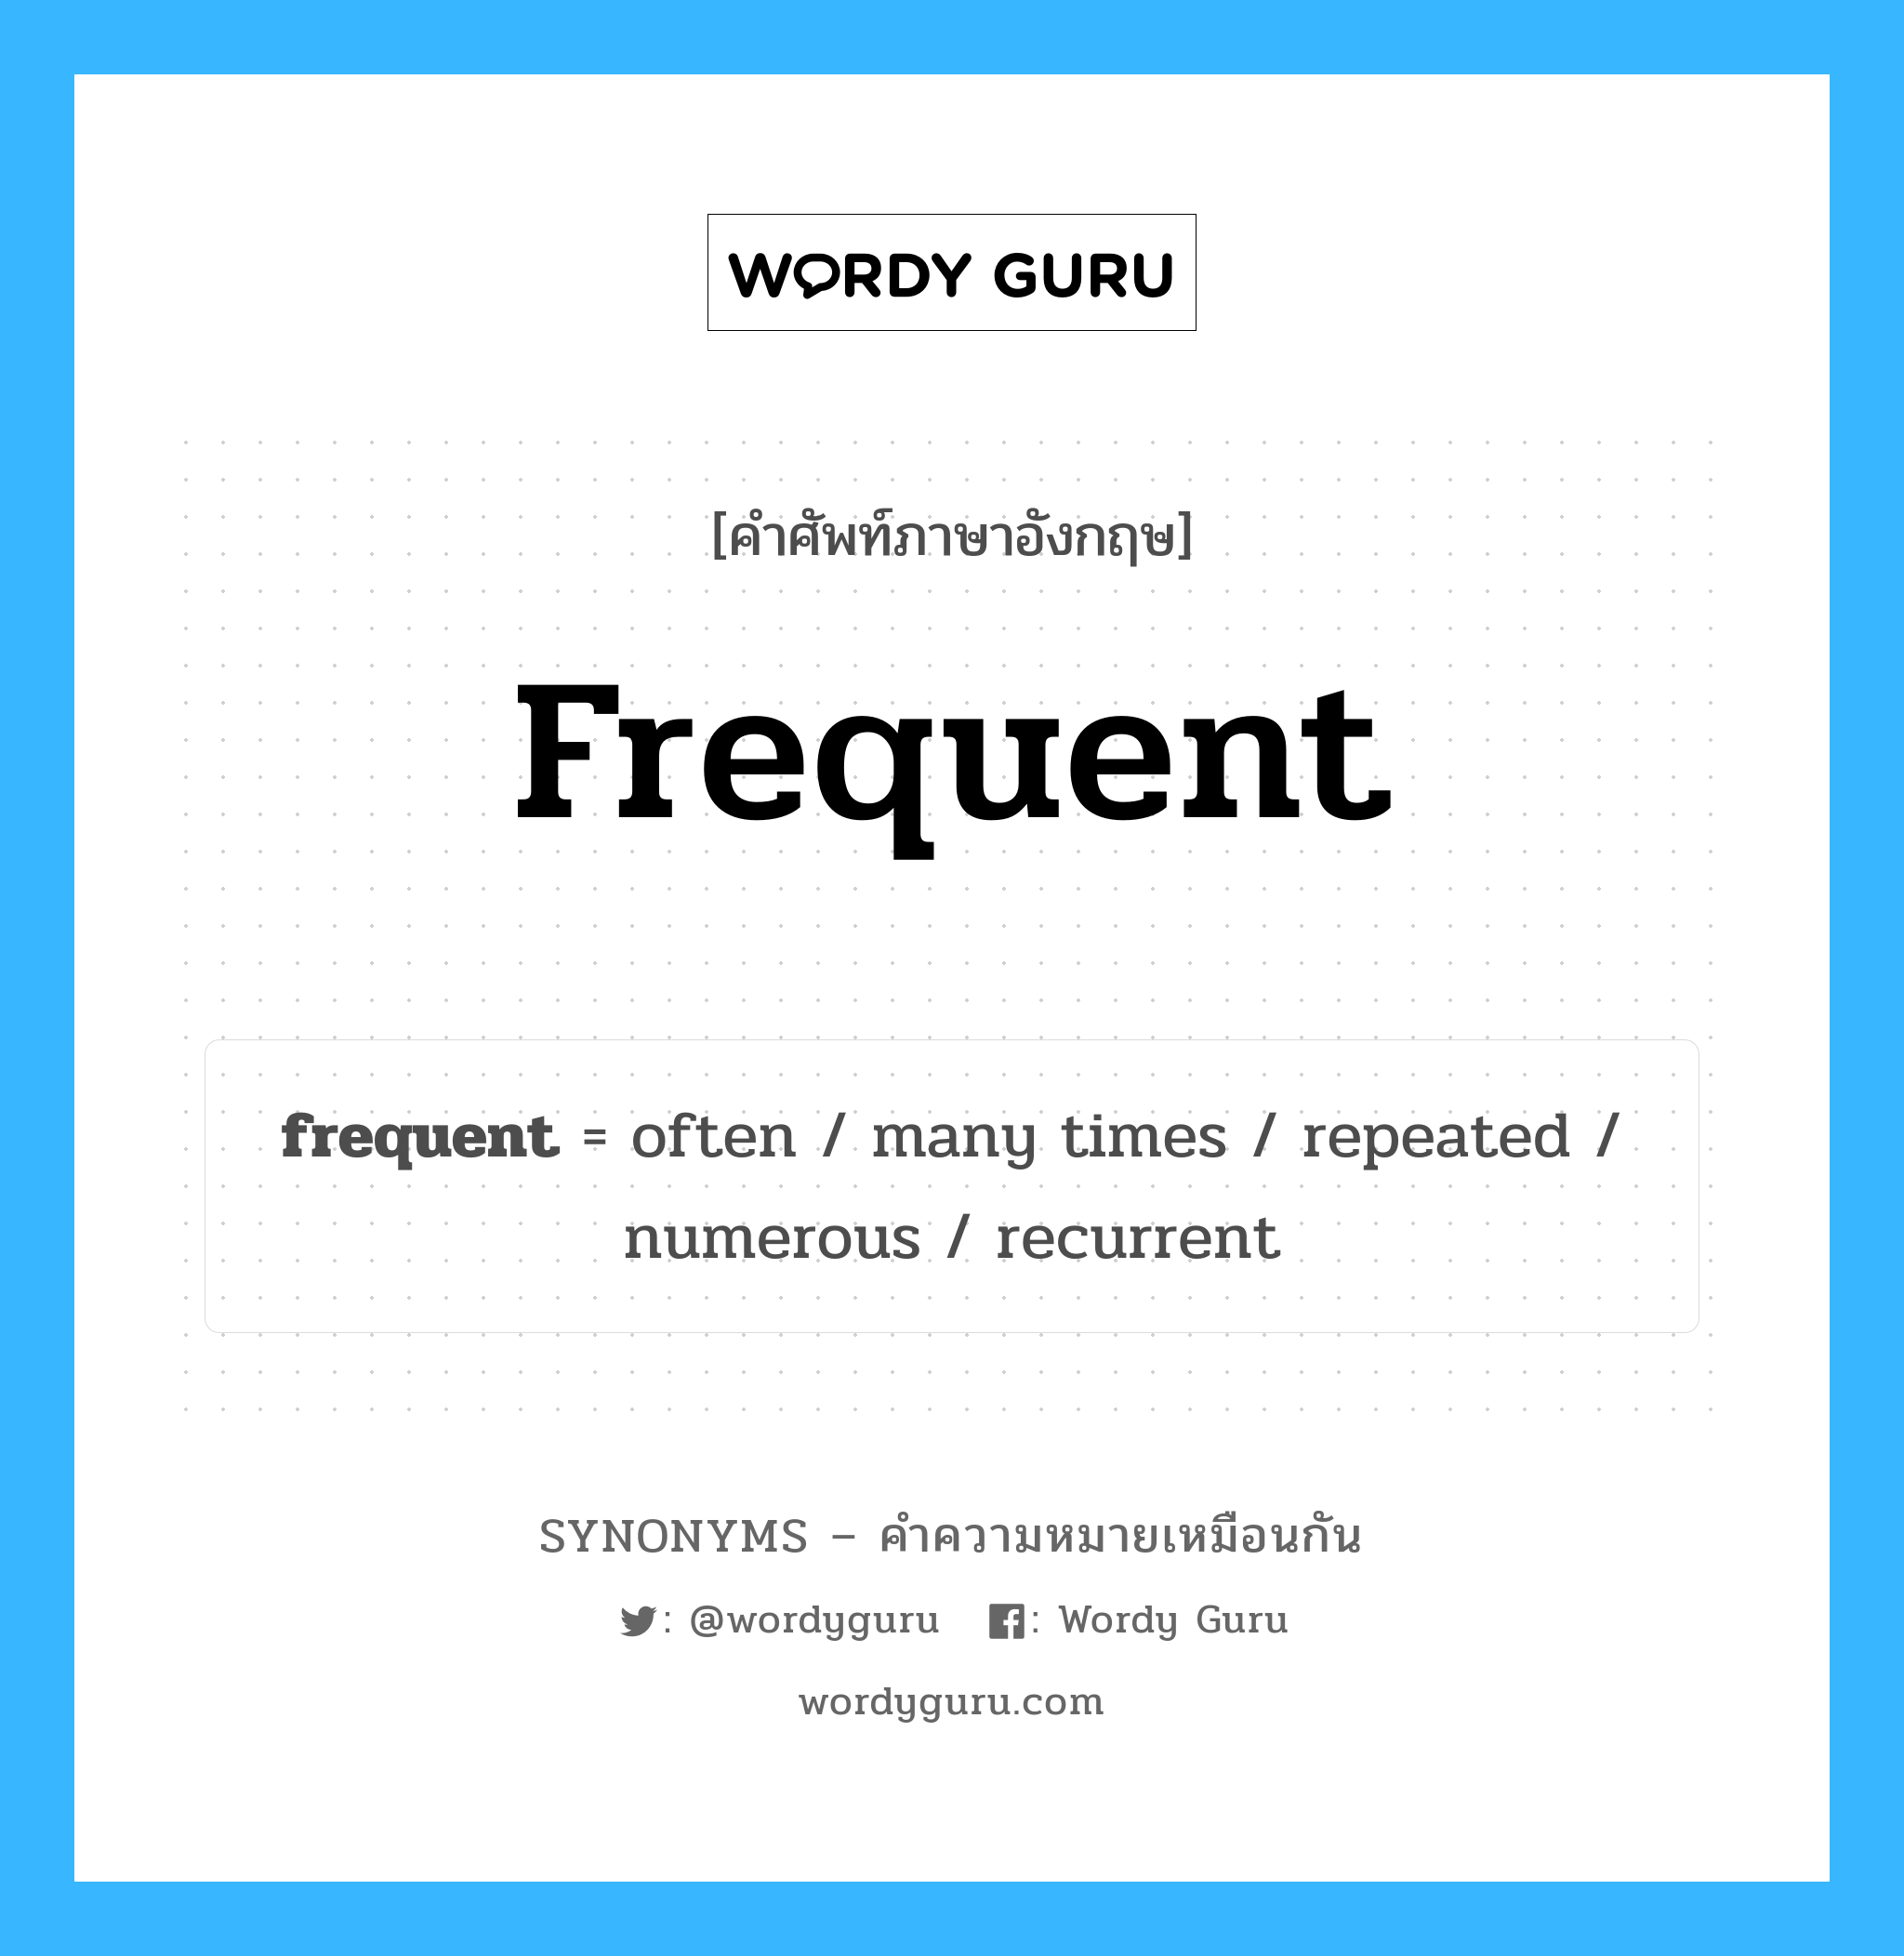 repeated เป็นหนึ่งใน frequent และมีคำอื่น ๆ อีกดังนี้, คำศัพท์ภาษาอังกฤษ repeated ความหมายคล้ายกันกับ frequent แปลว่า การทำซ้ำ หมวด frequent